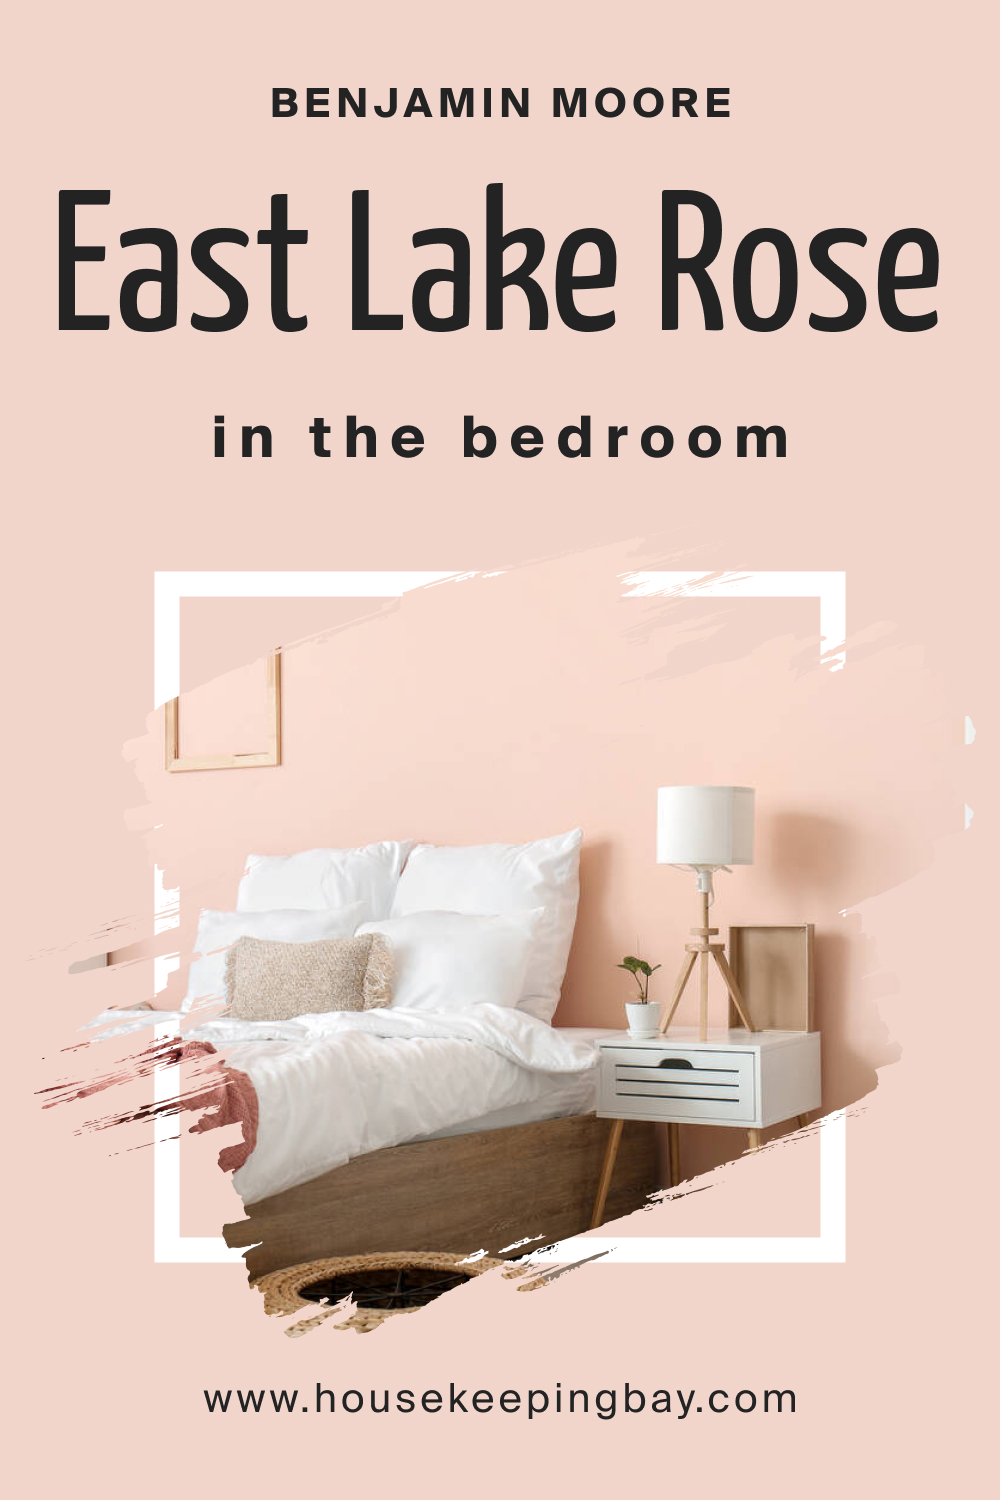 Benjamin Moore. BM East Lake Rose 043 for the Bedroom